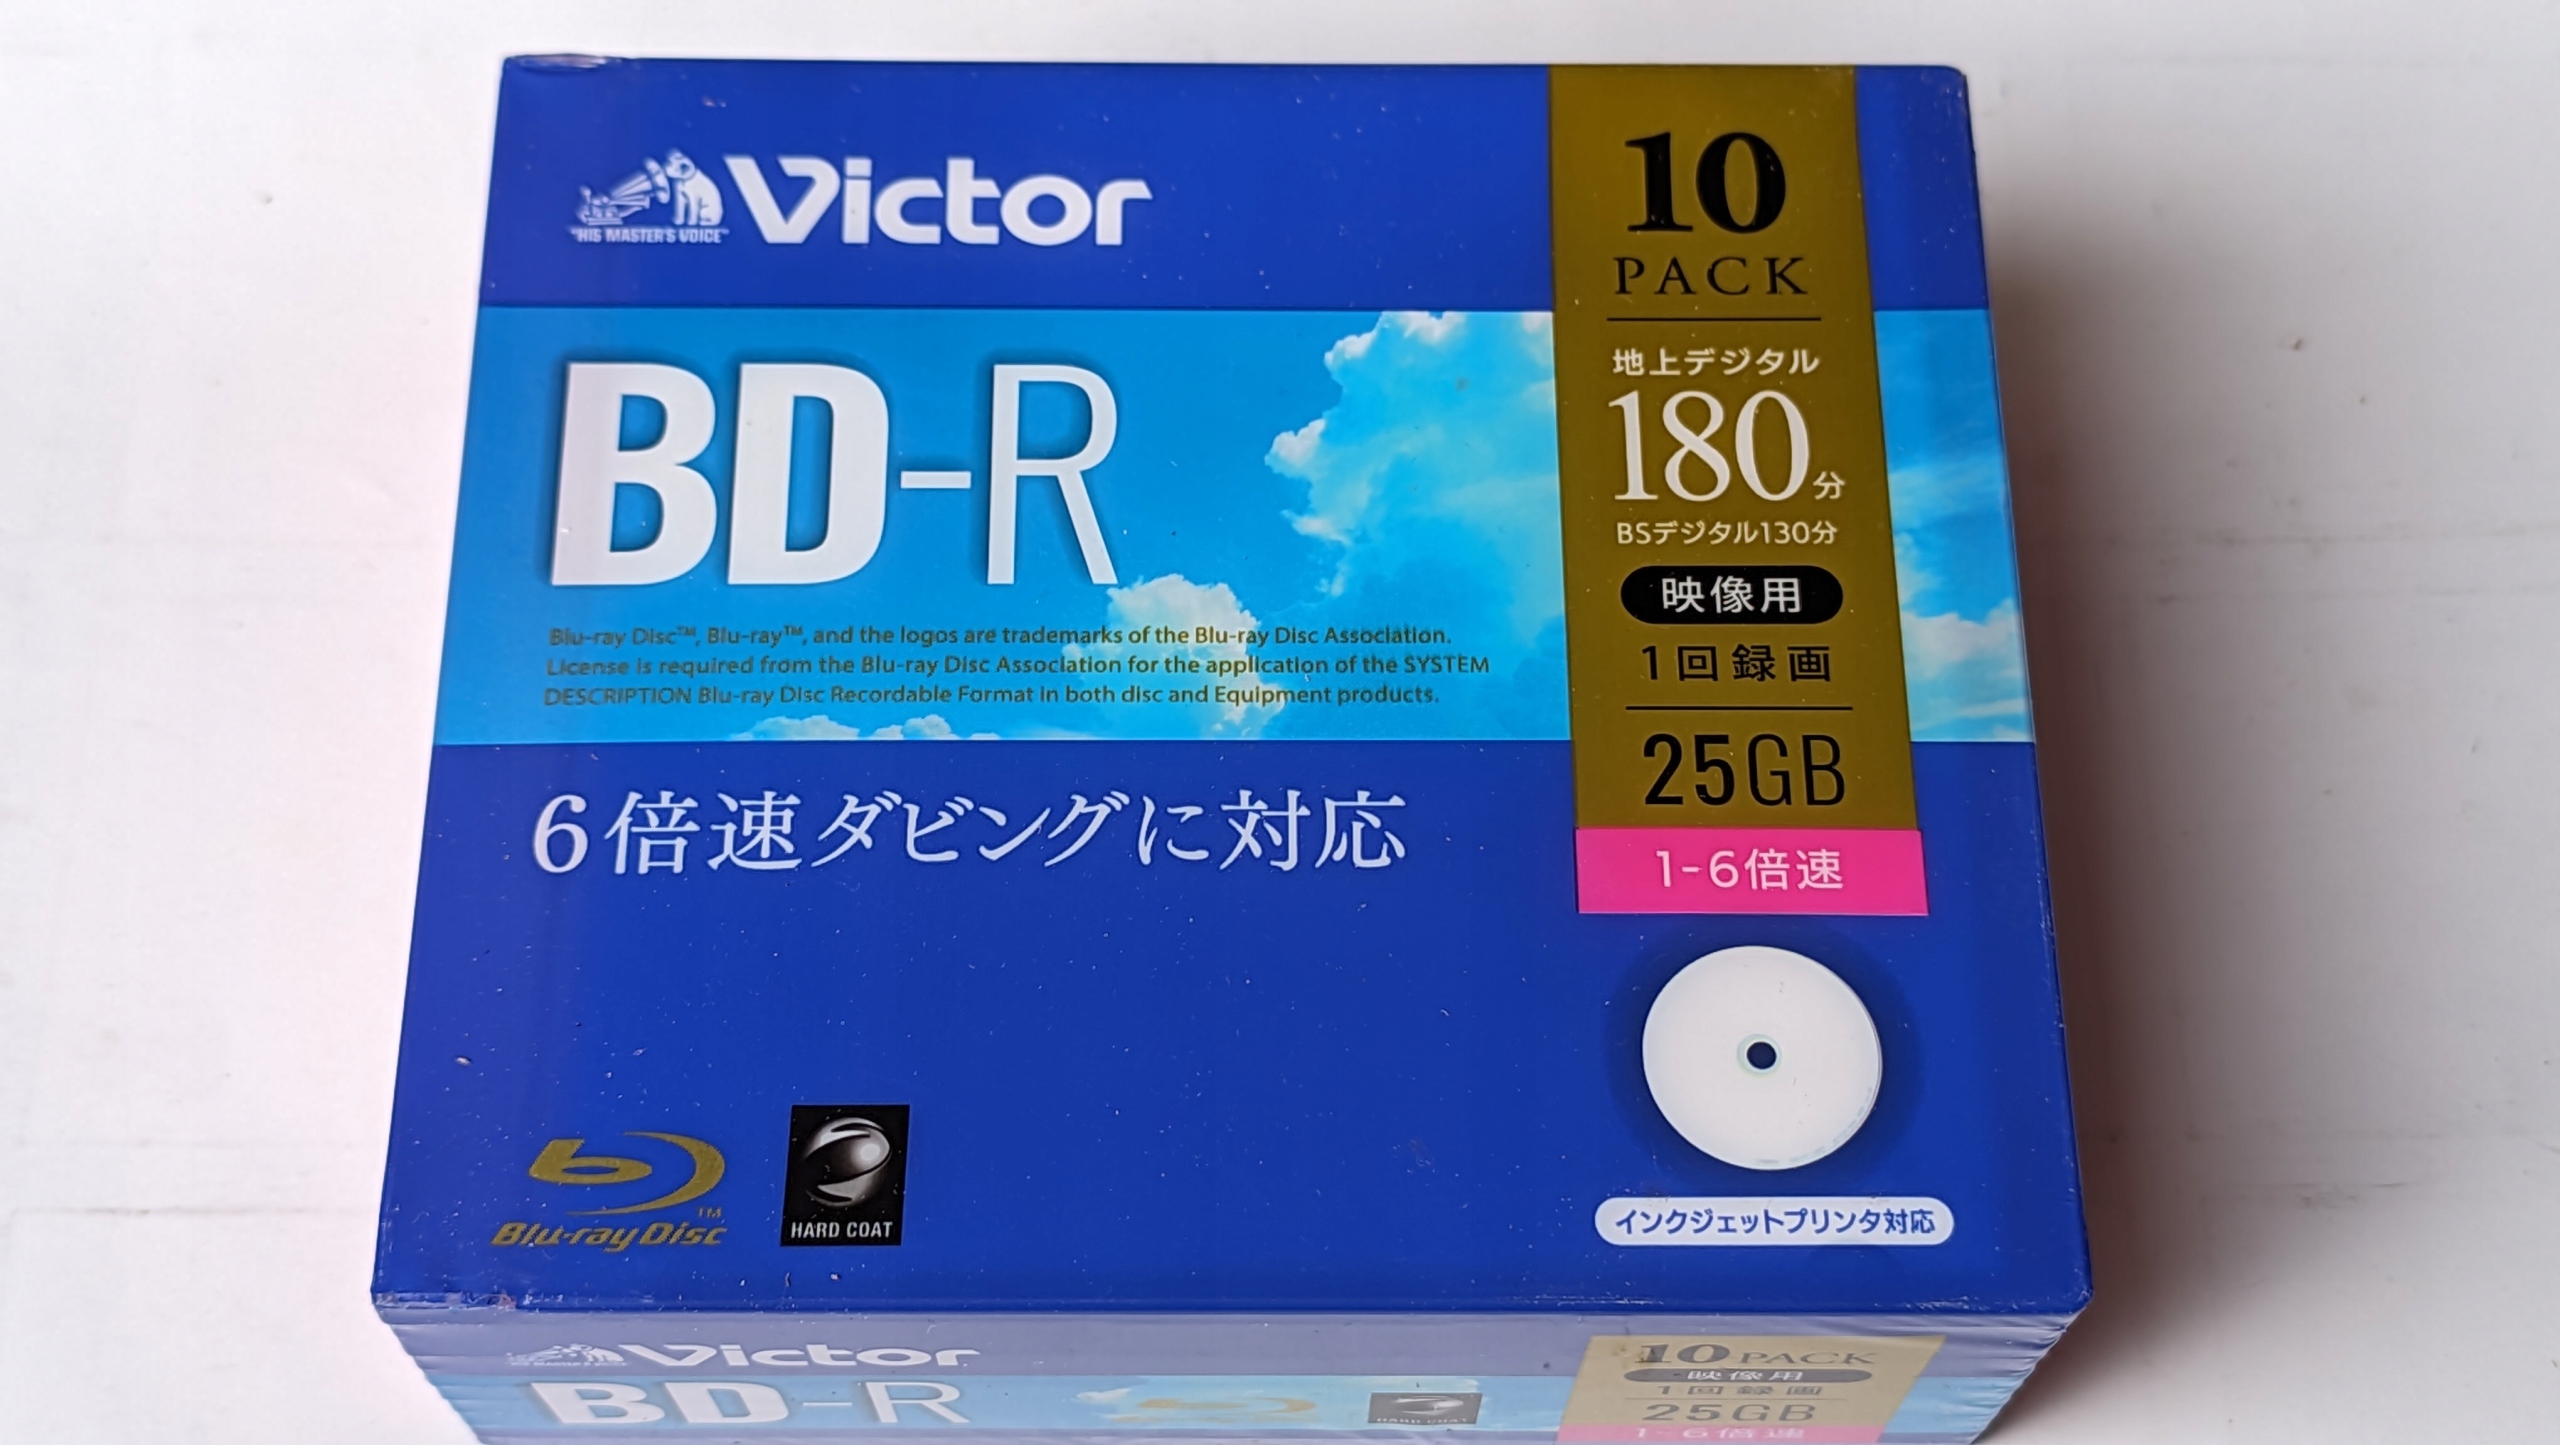 Jvc Victor Bd-r 25GB Printable x6 Japan 10 pack 10 pcs